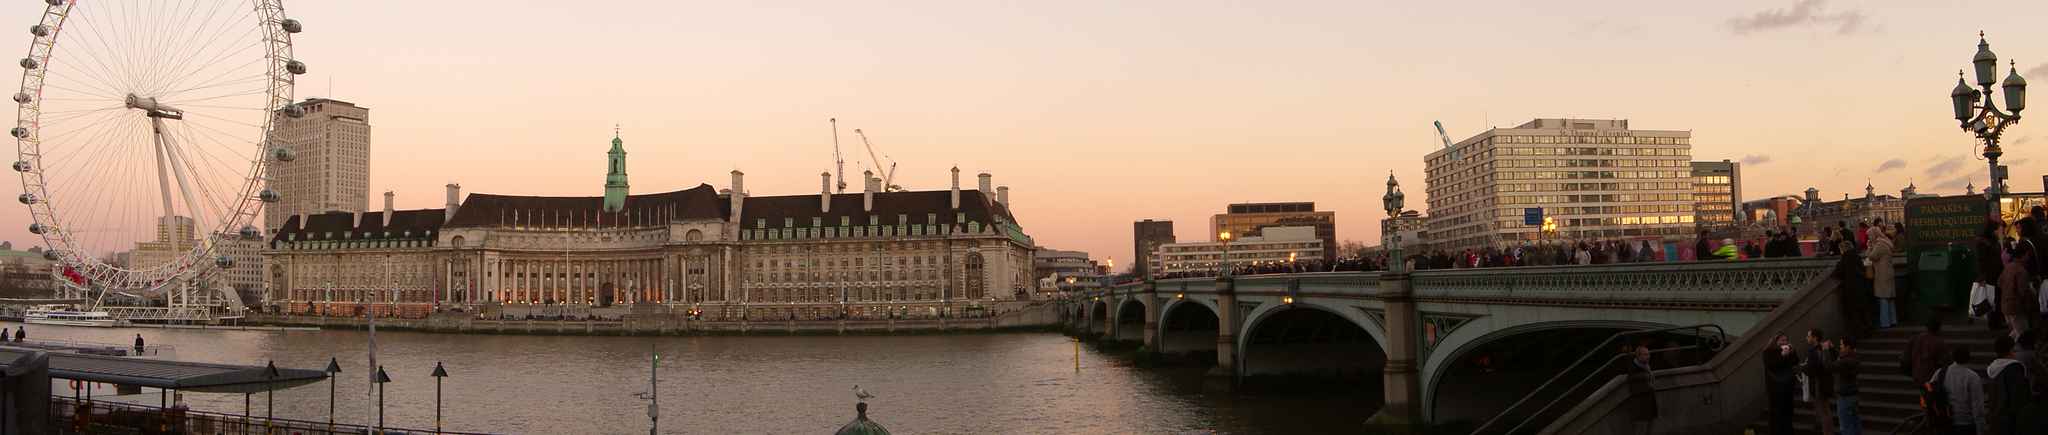 Westminster Bridge panorama